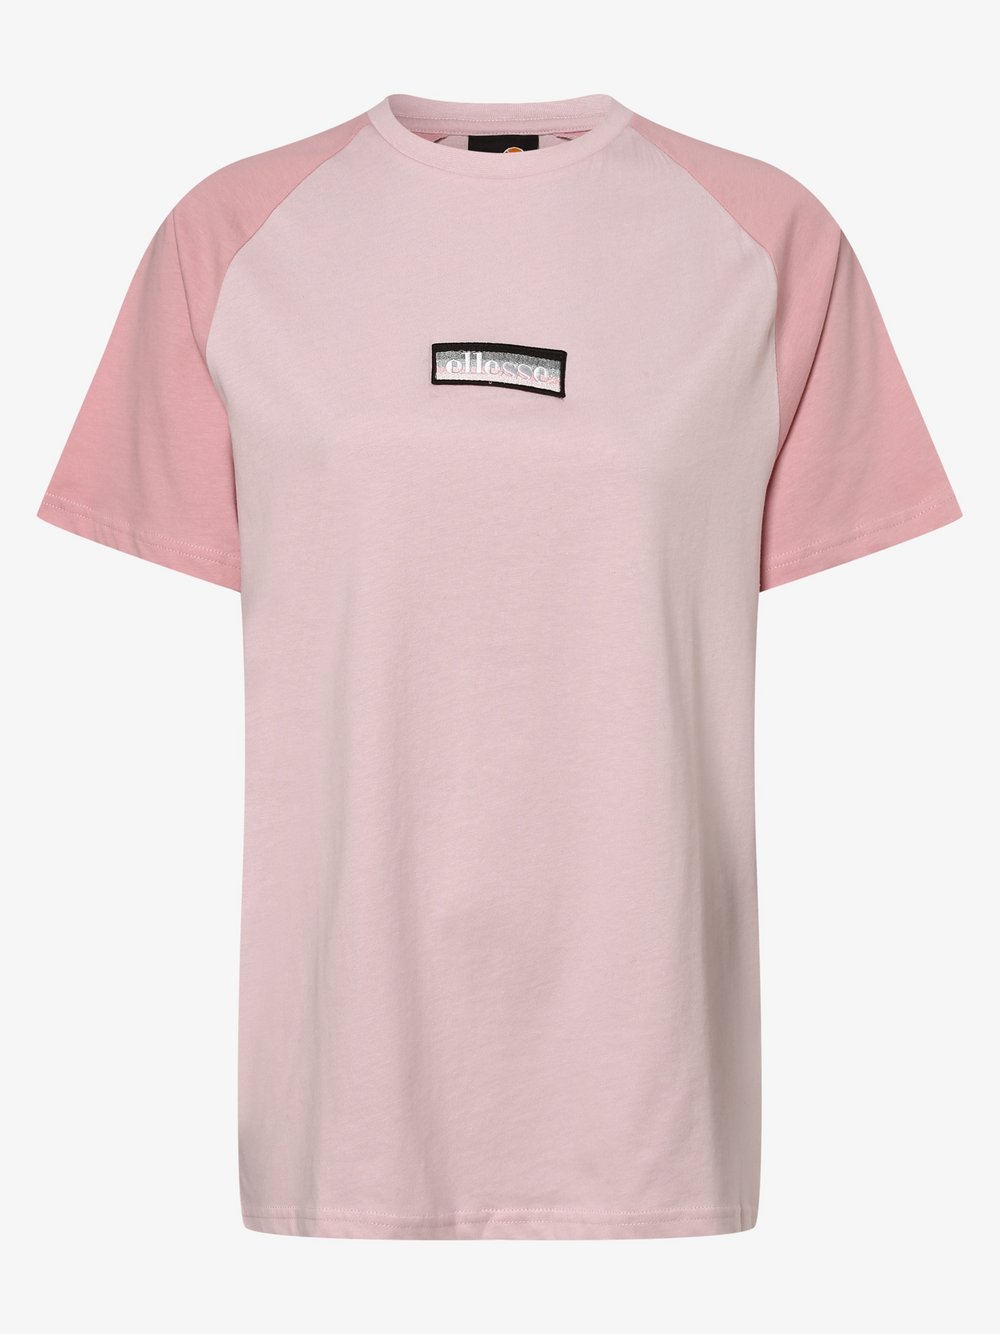 ellesse - T-shirt damski – Micha, różowy